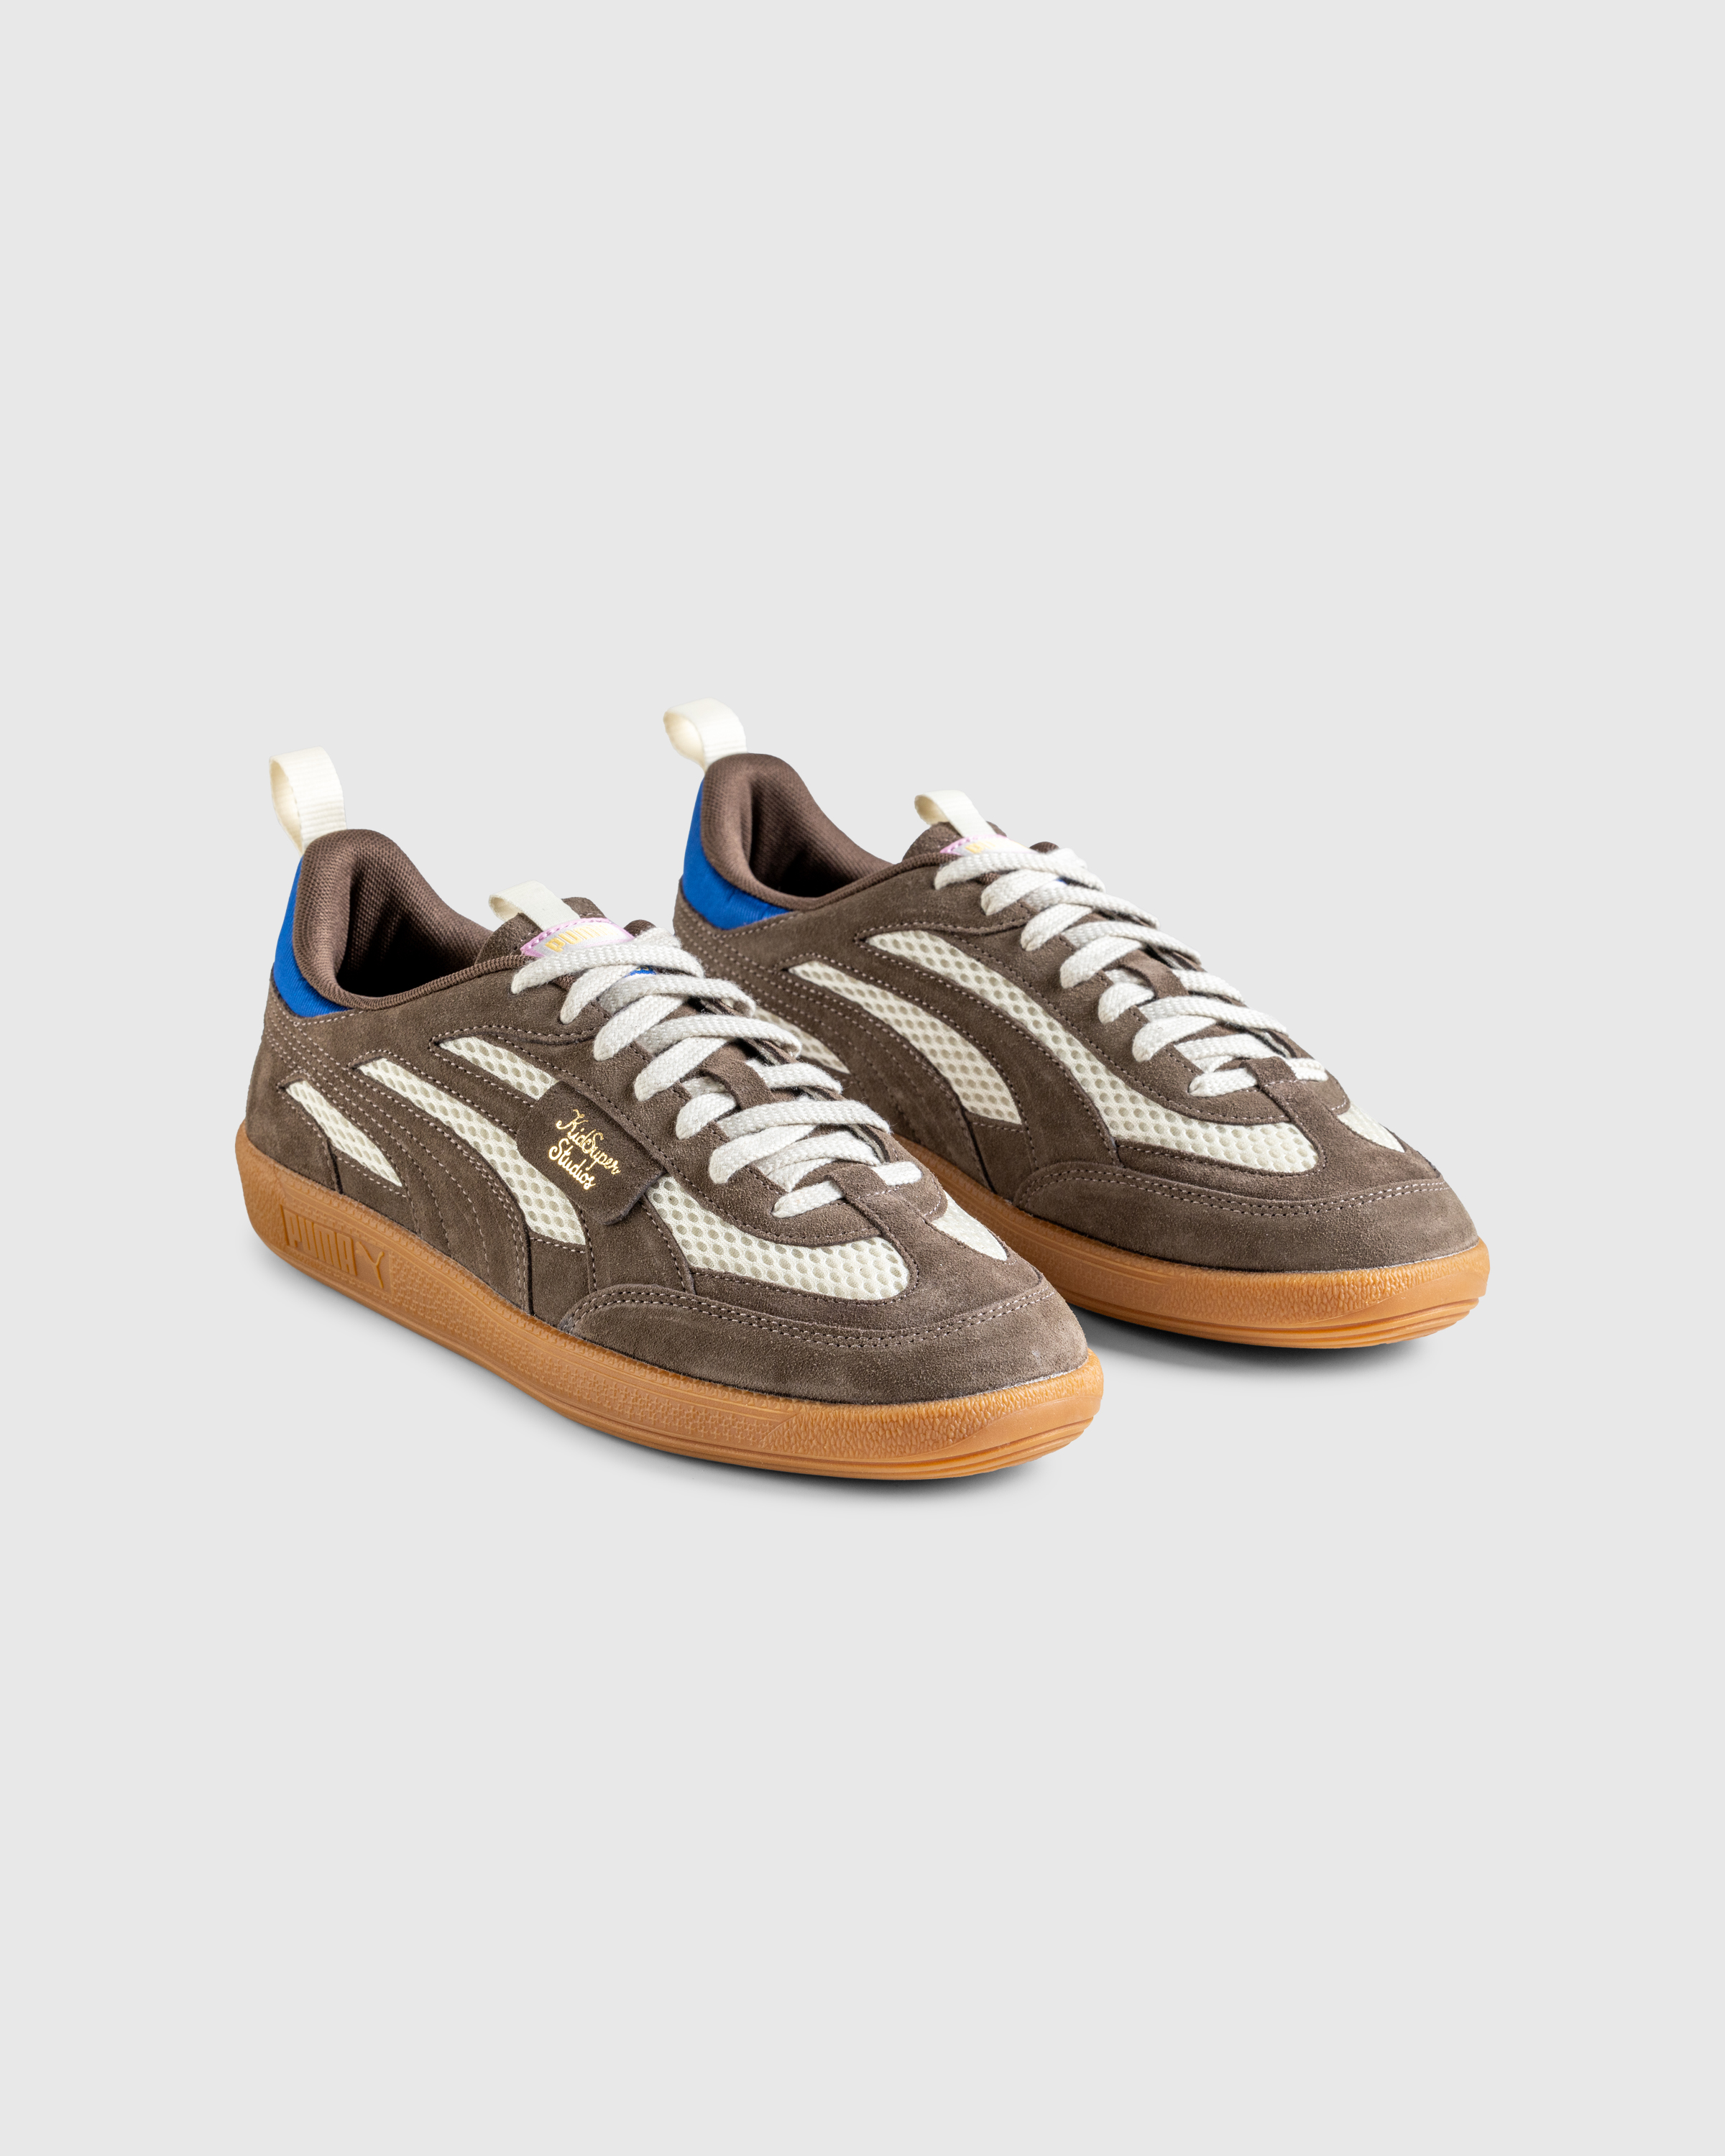 Puma x KidSuper – Palermo Chocolate - Sneakers - Brown - Image 3